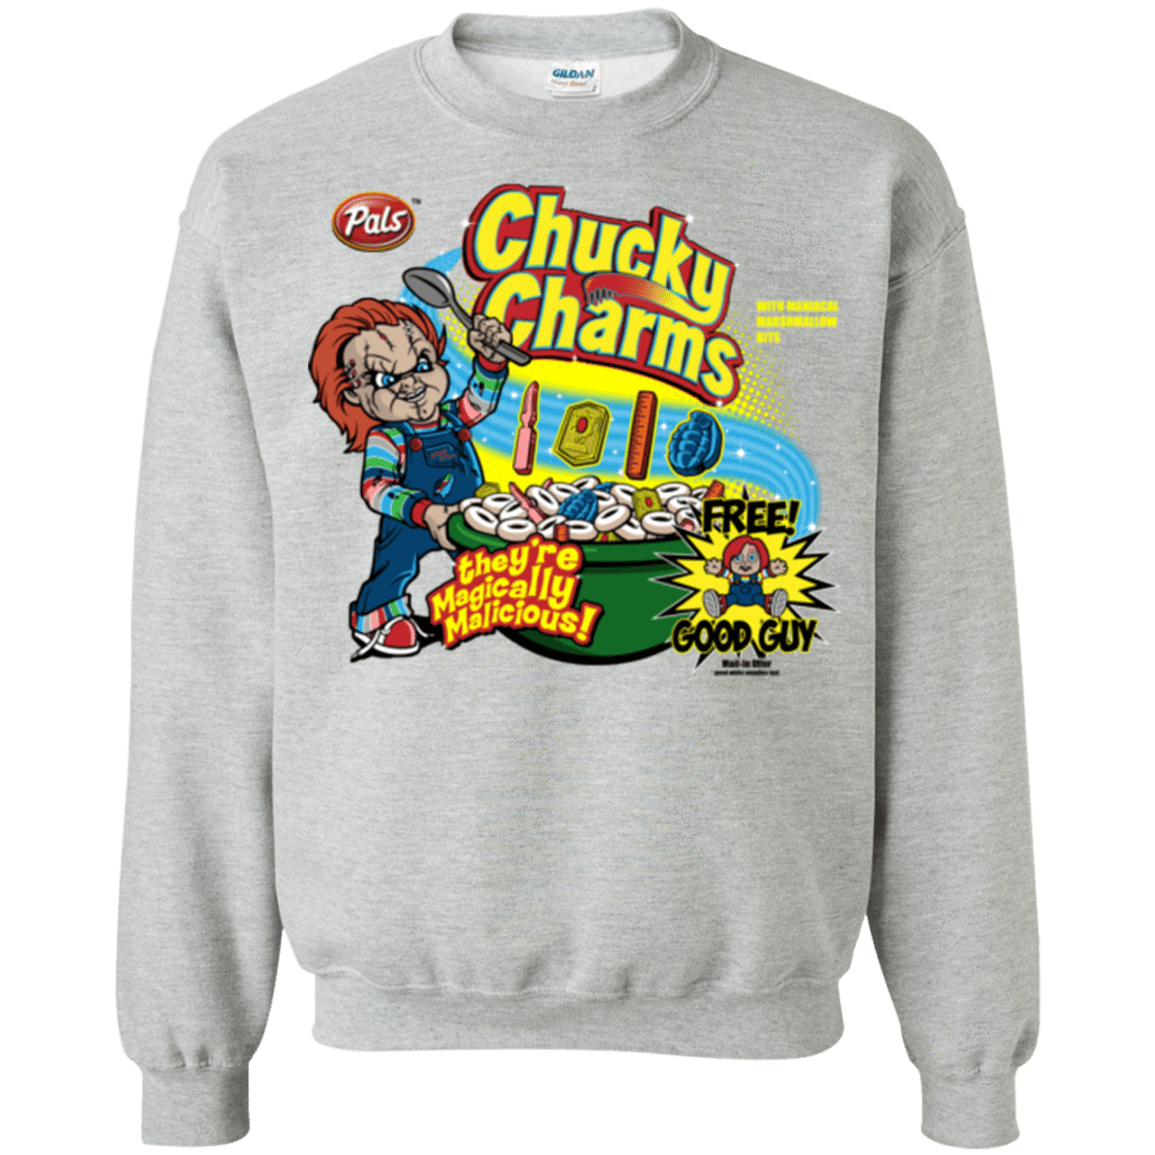 Sweatshirts Sport Grey / Small Chucky Charms Crewneck Sweatshirt